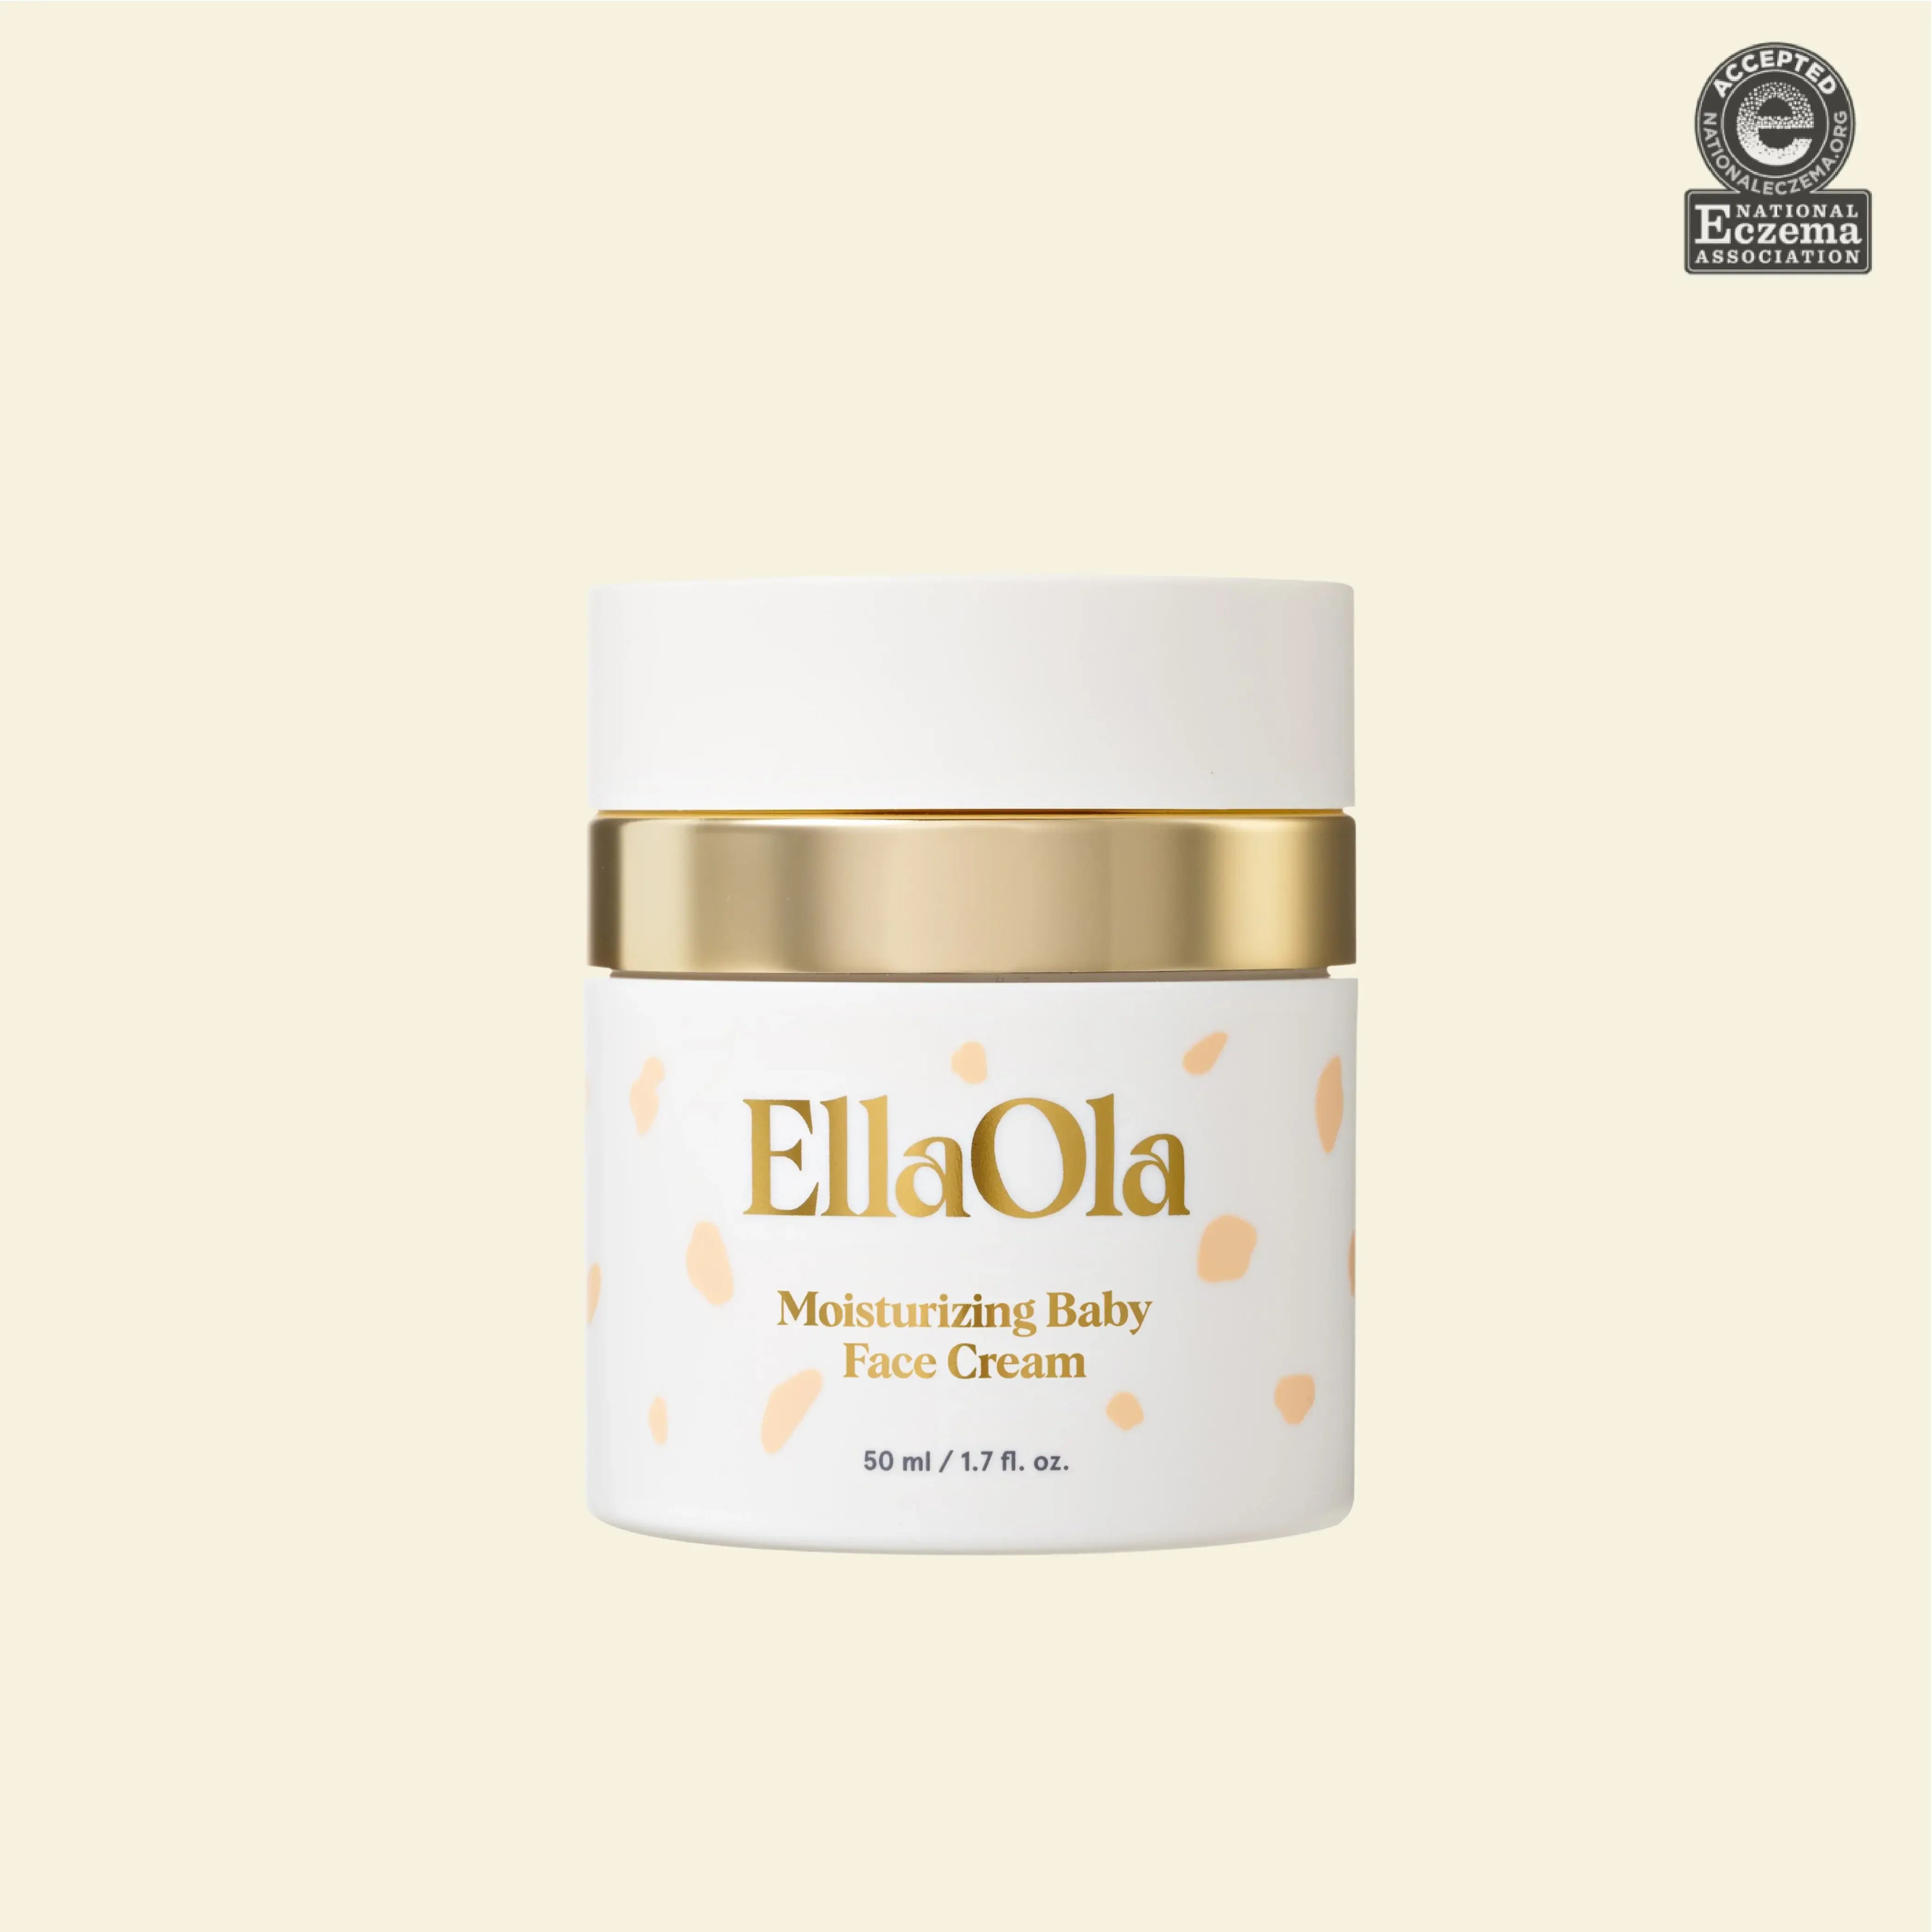 EllaOla - EllaOla Moisturizing Baby Face Cream